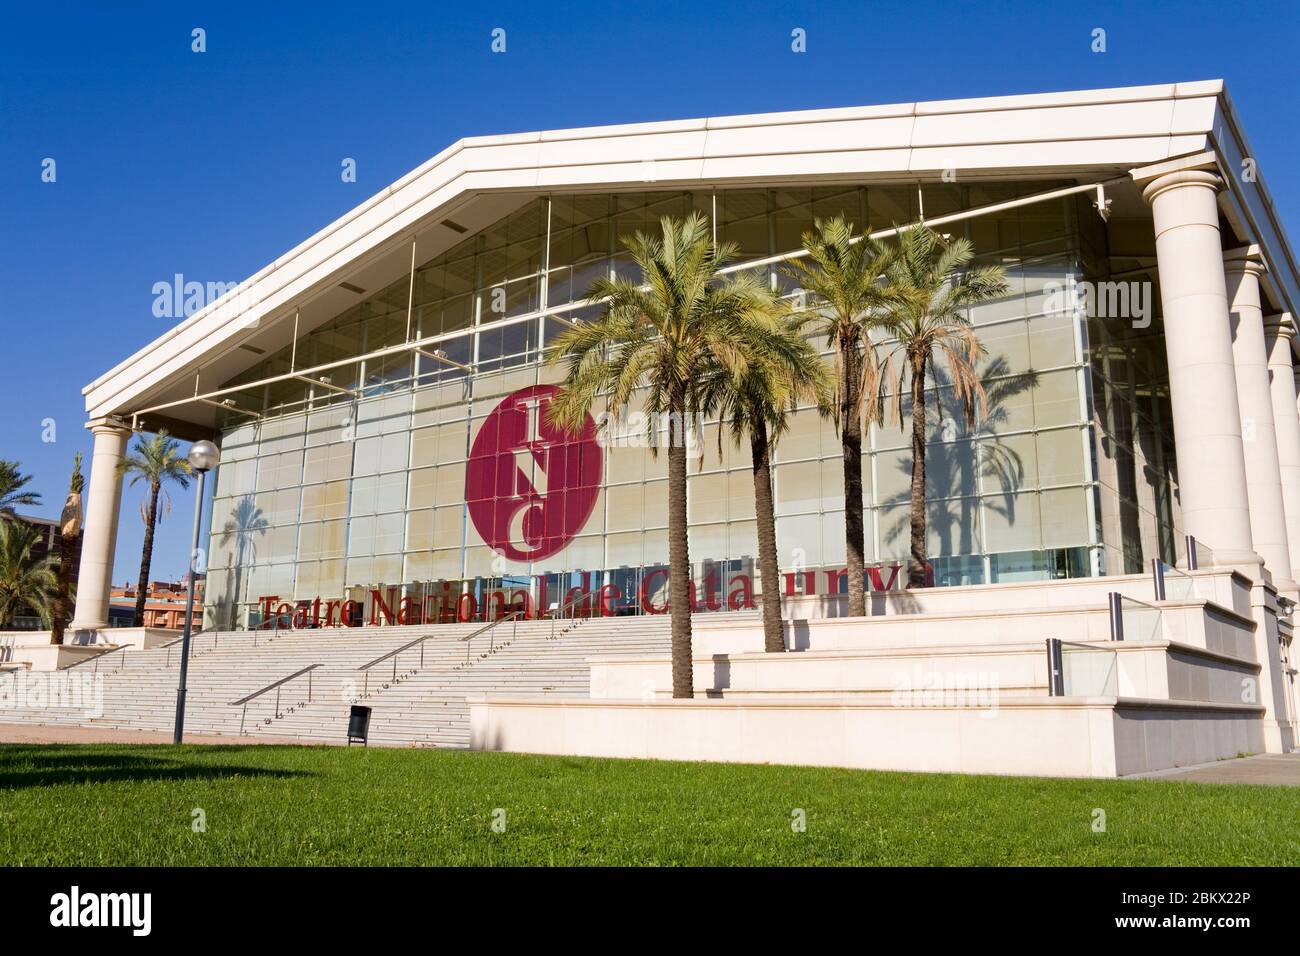 Teatre Nacionale de Catalunya conçu par Richard Bofill, Barcelone, Catalogne, Espagne, Europe Banque D'Images